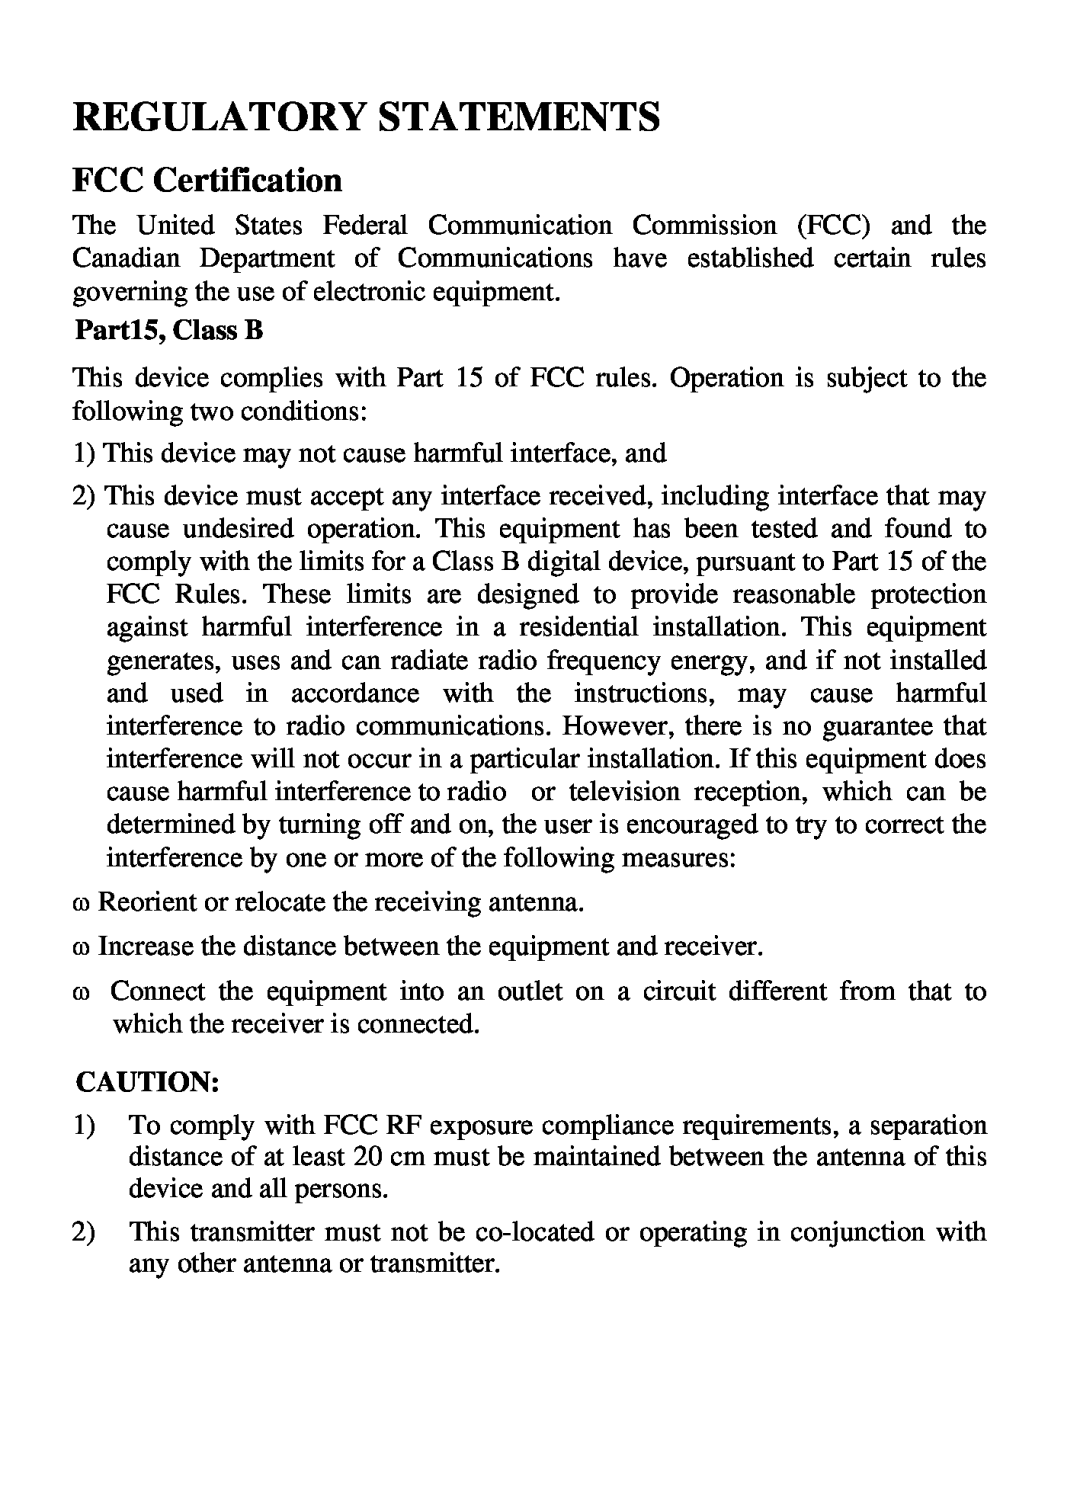 Xterasys USB Adapter user manual Regulatory Statements, FCC Certification 